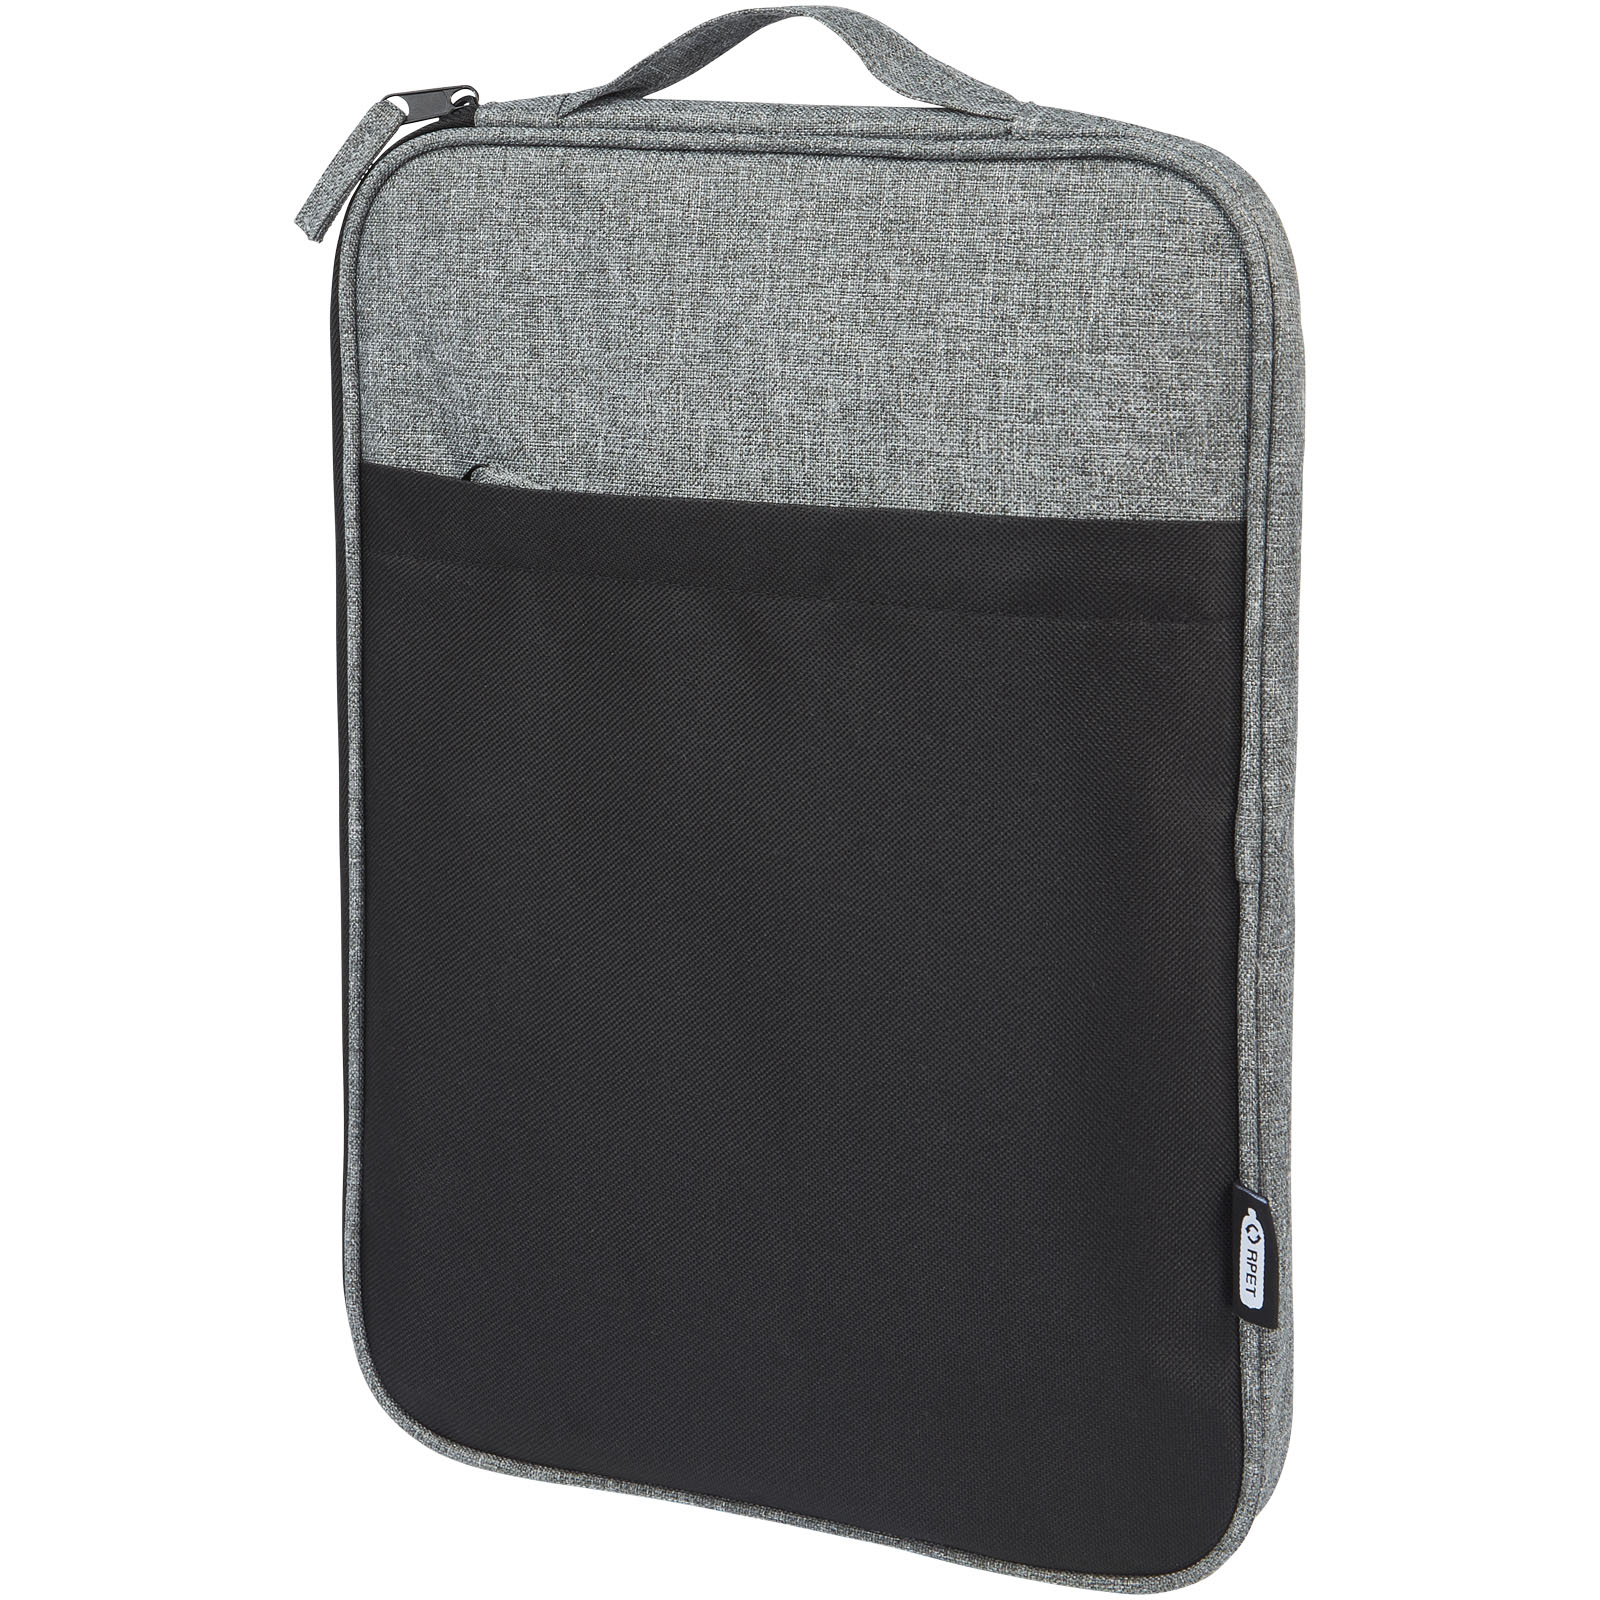 Pouzdro na 14palcový notebook RECLAM, 2,5 l - solid black / heather grey